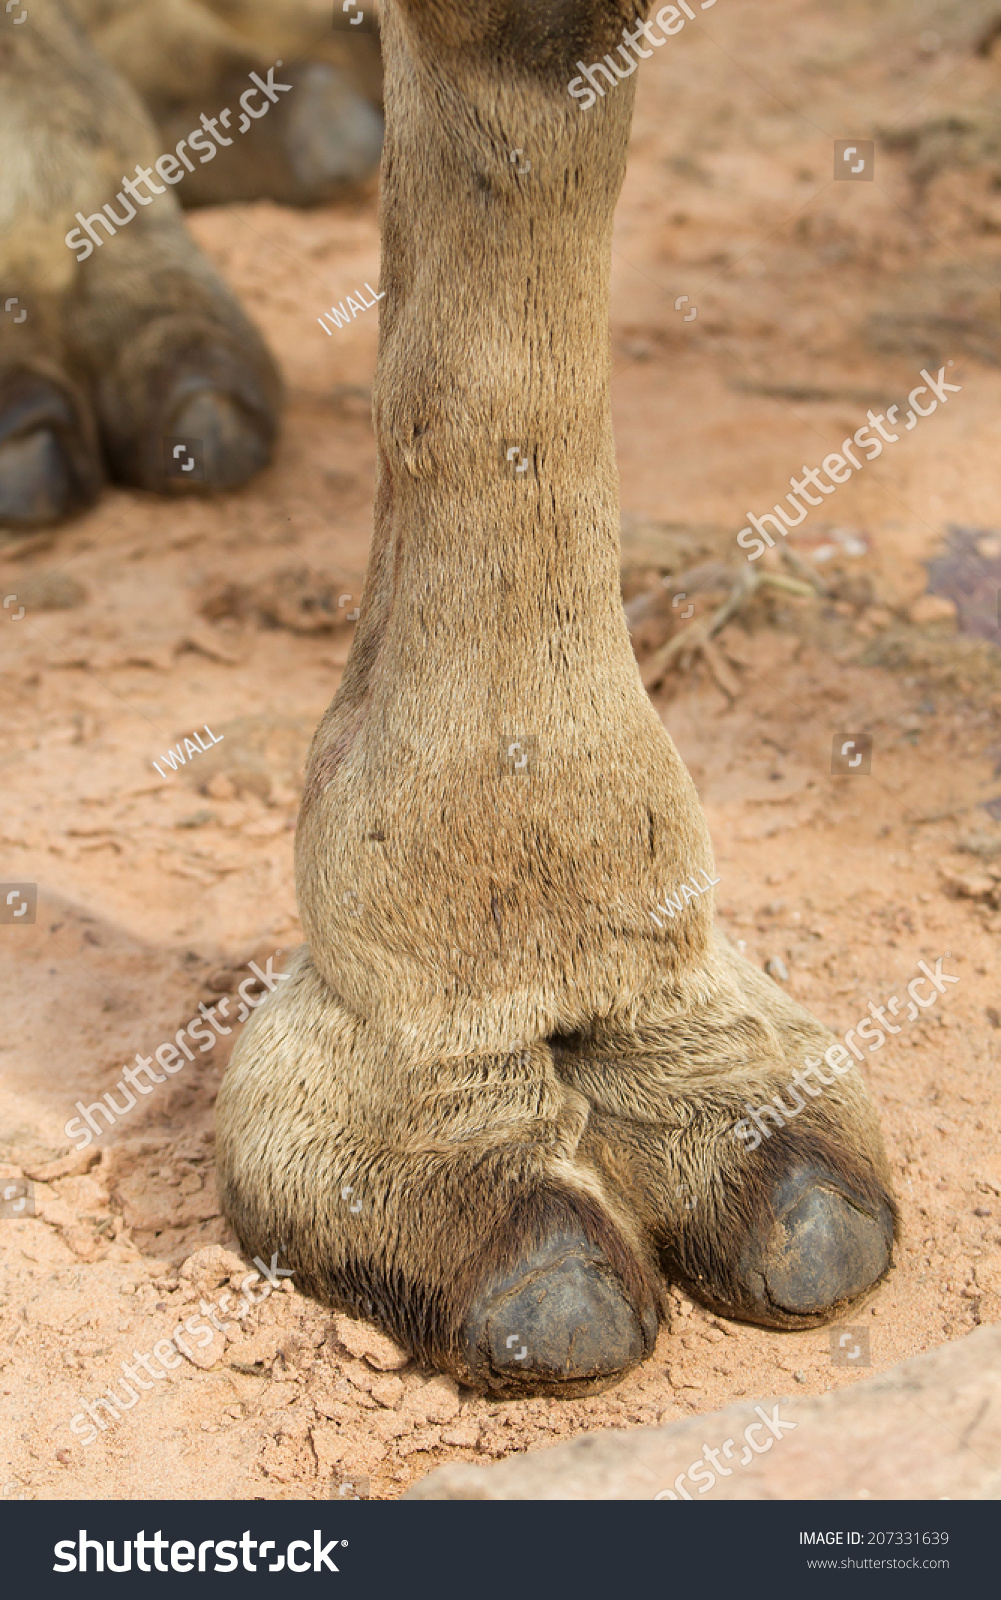 debra claflin share camel toez que es photos